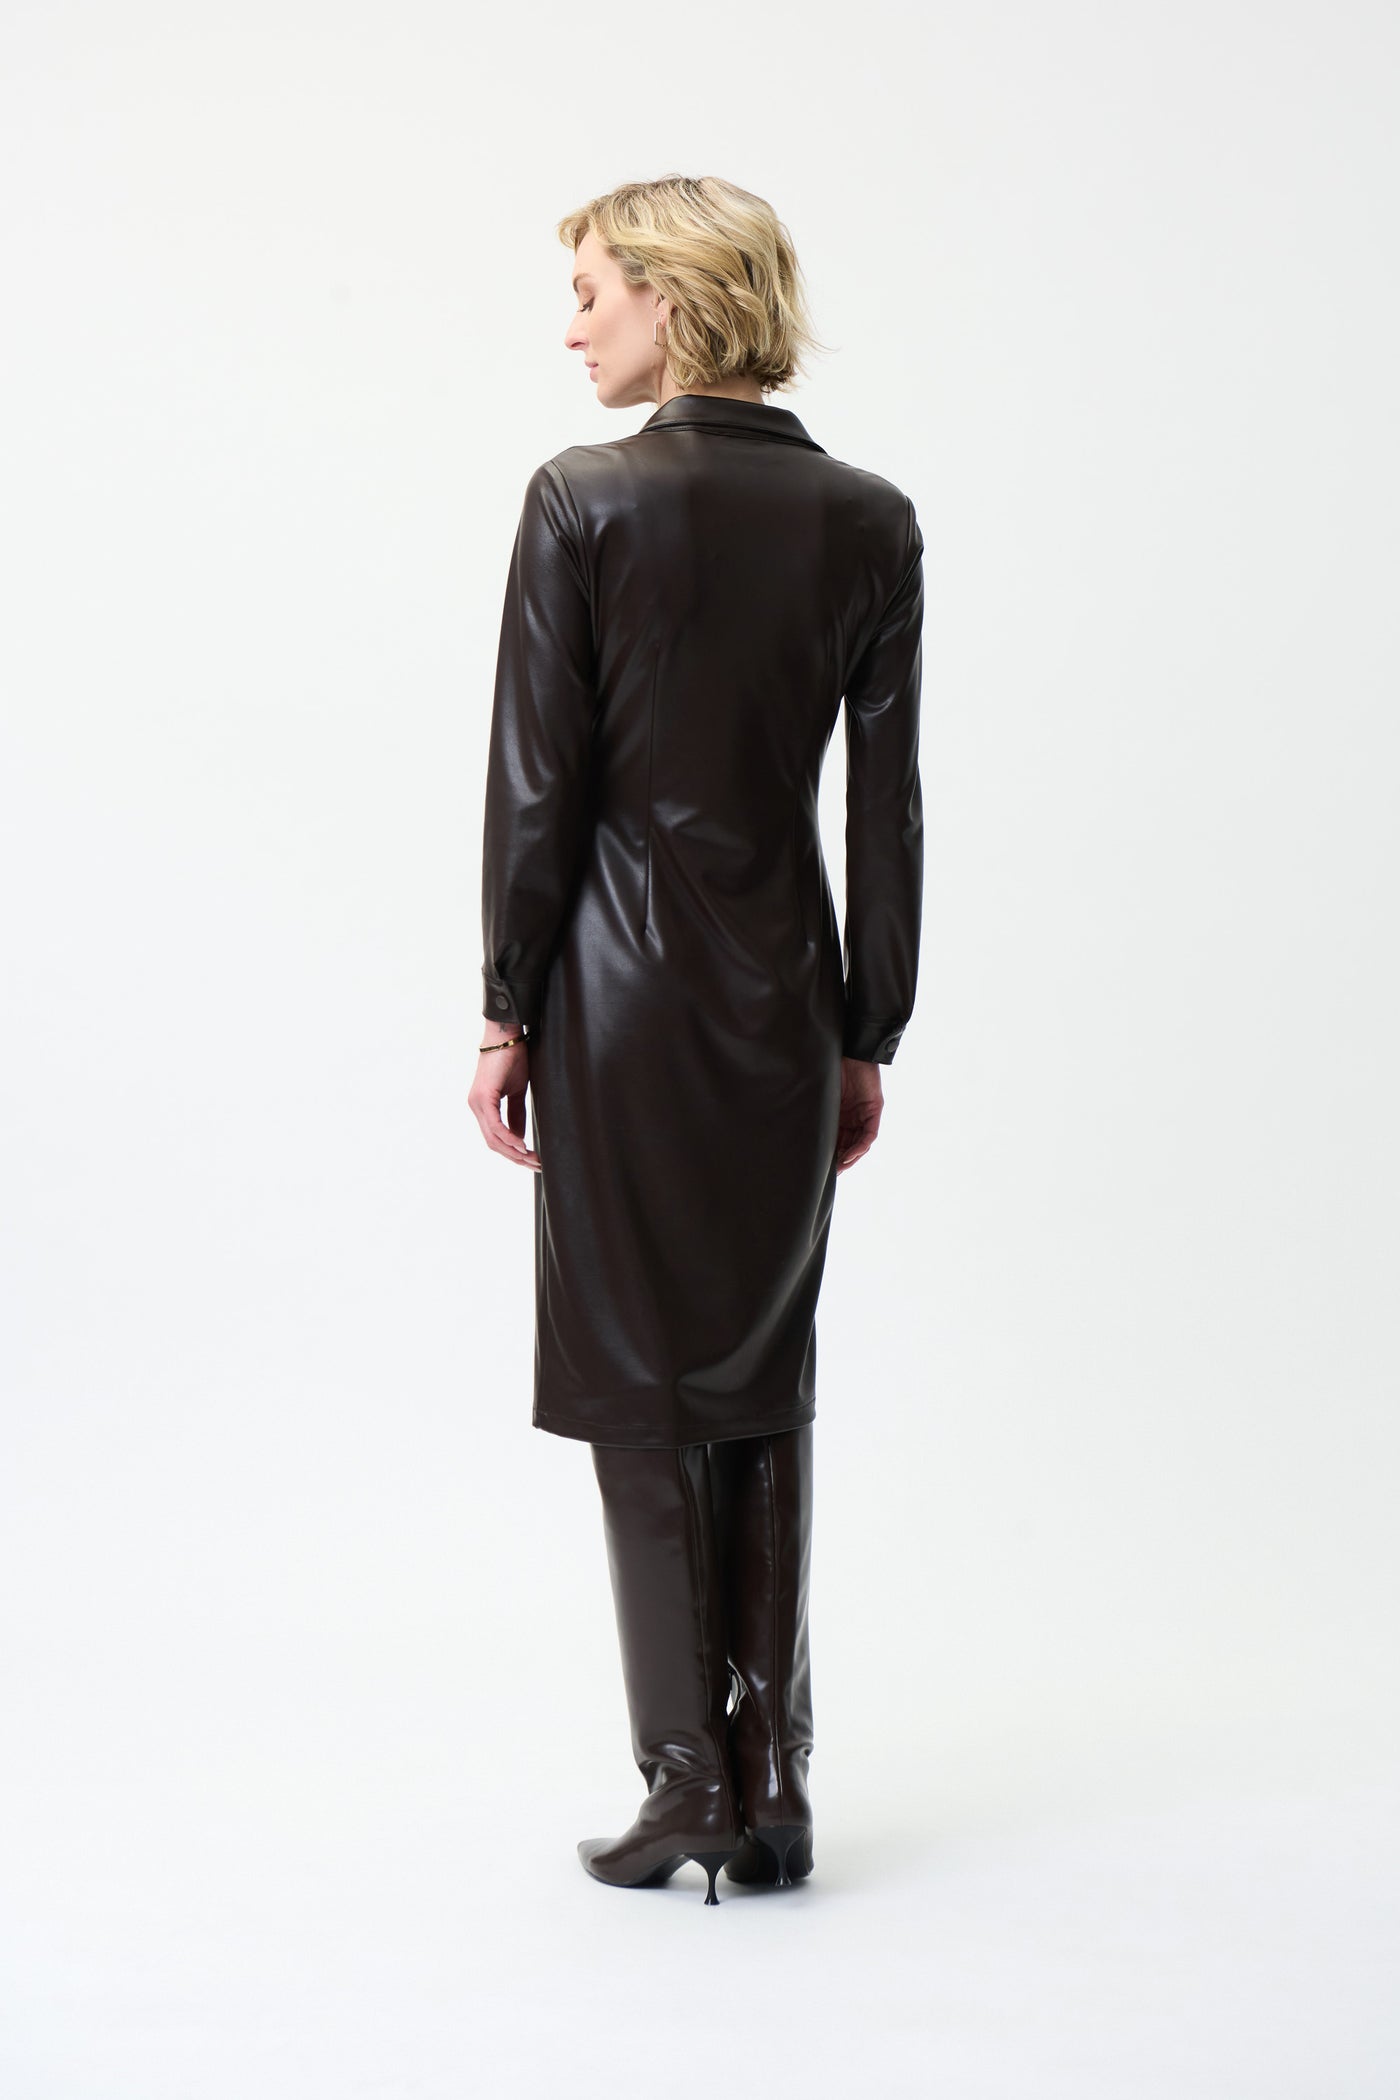 Joseph Ribkoff Dress Style 224097